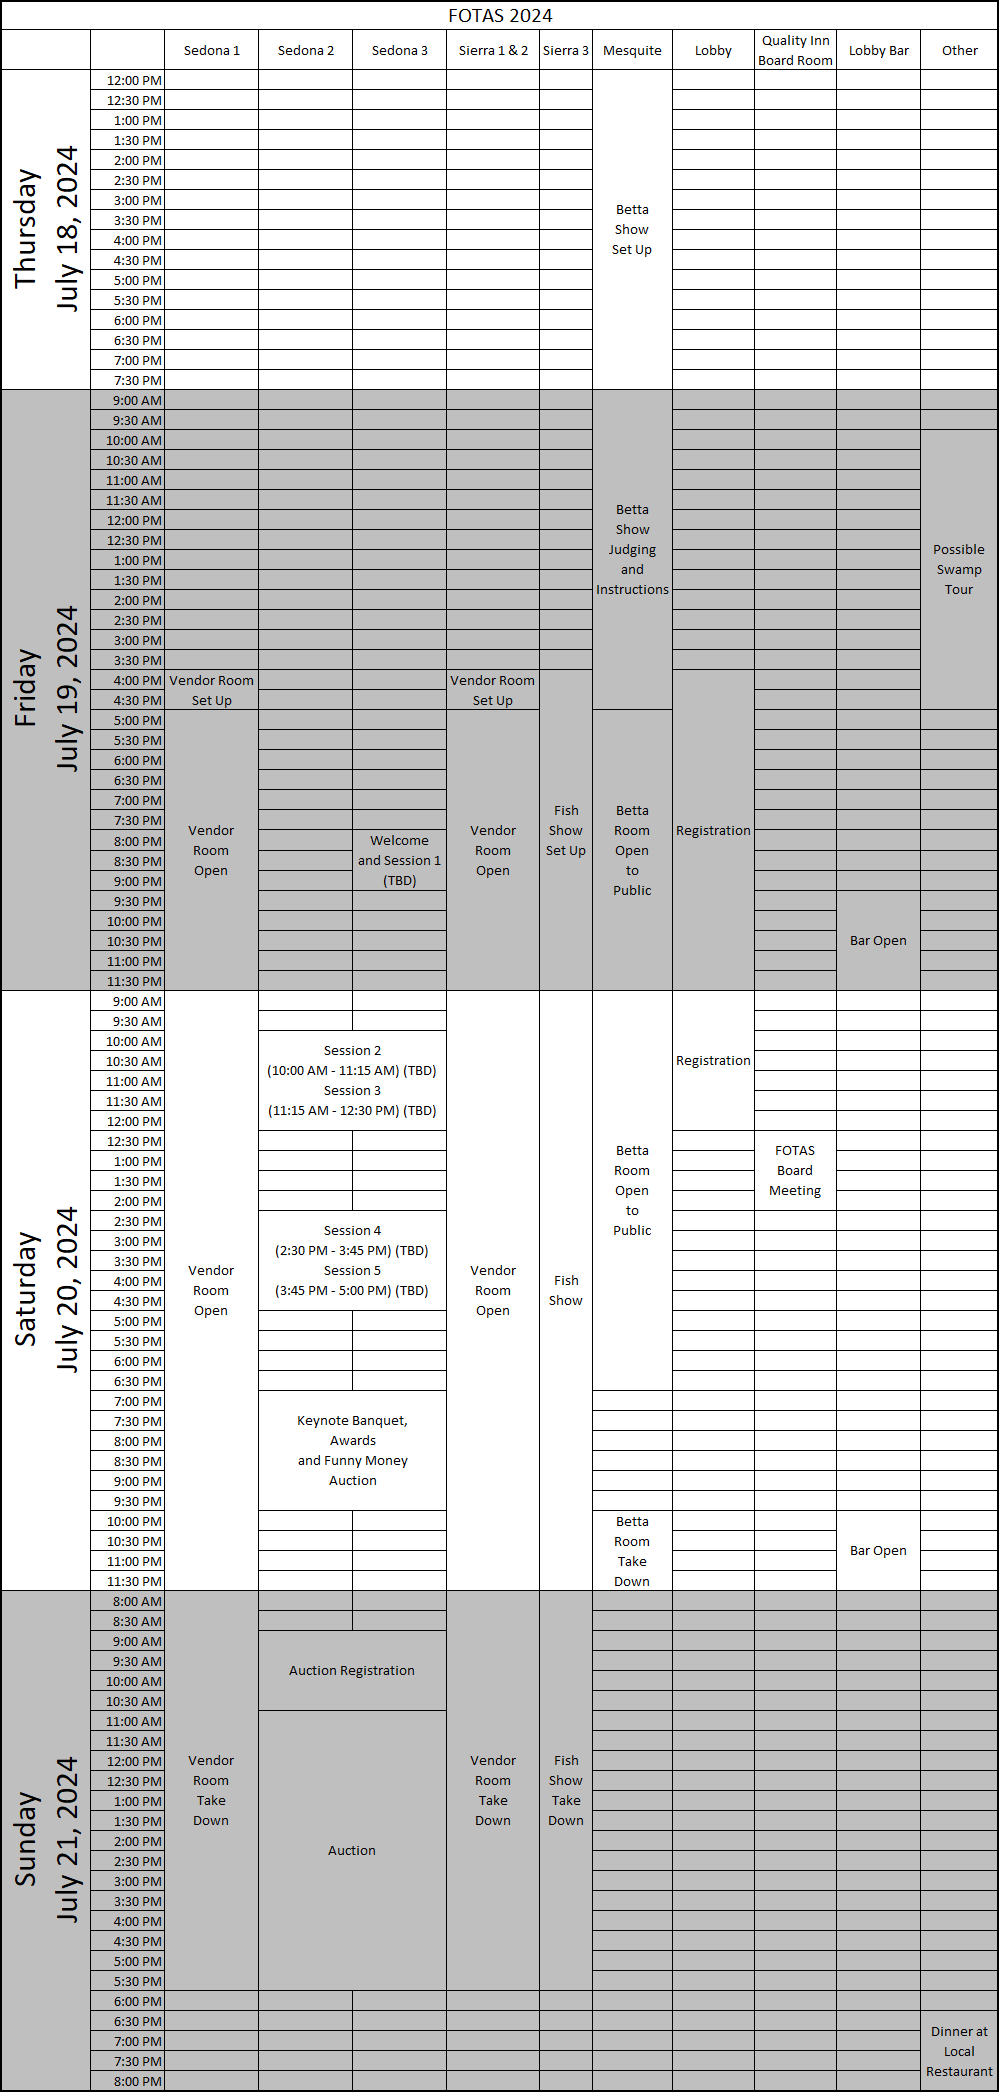 Schedule FOTAS / IBC 2024